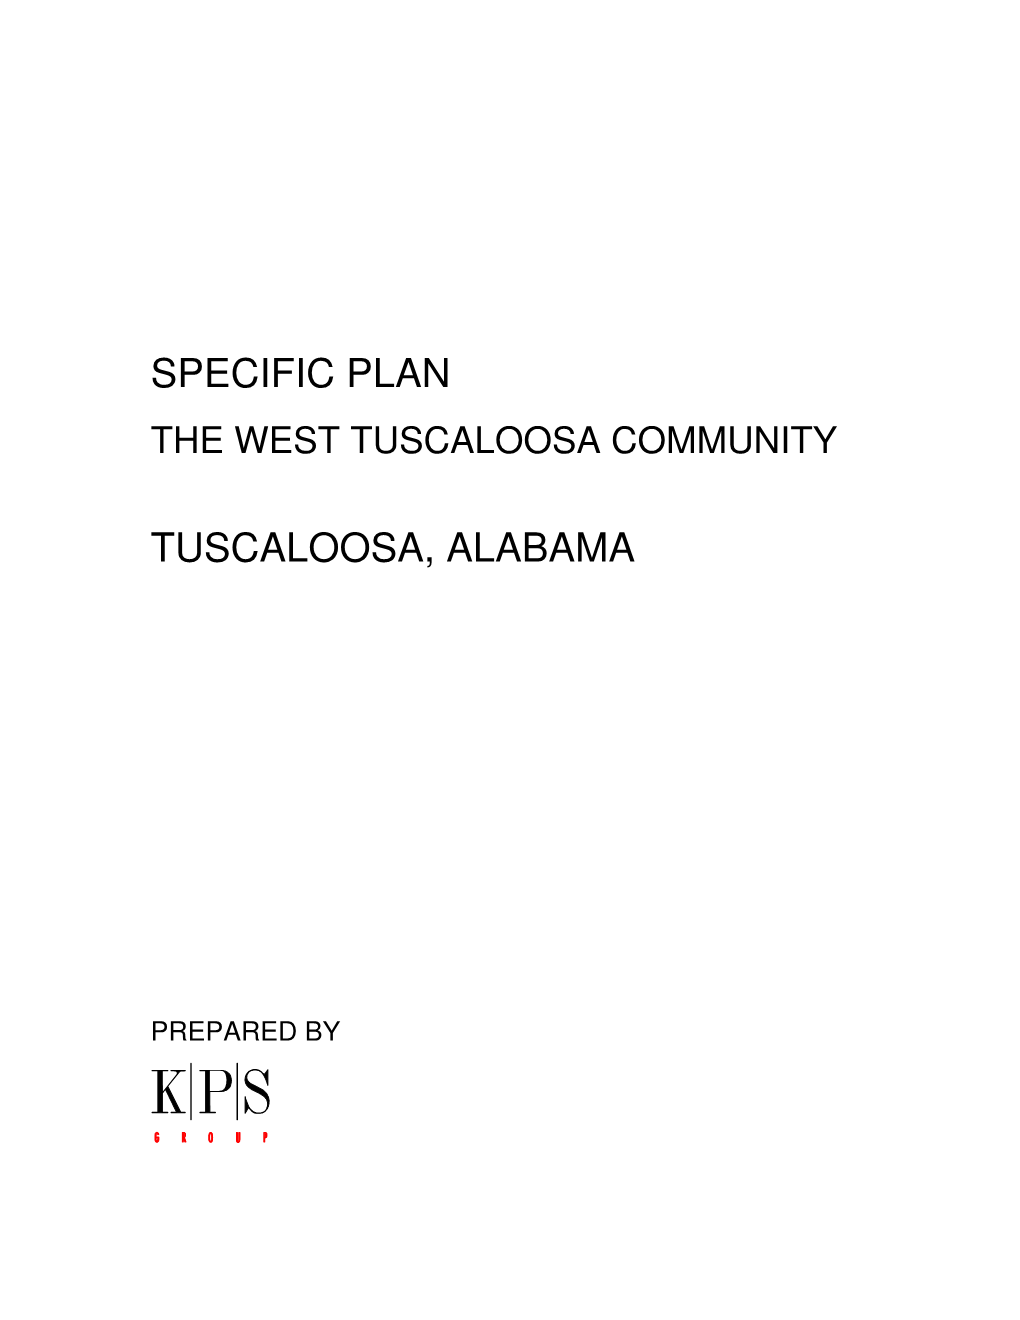 Specific Plan Tuscaloosa, Alabama